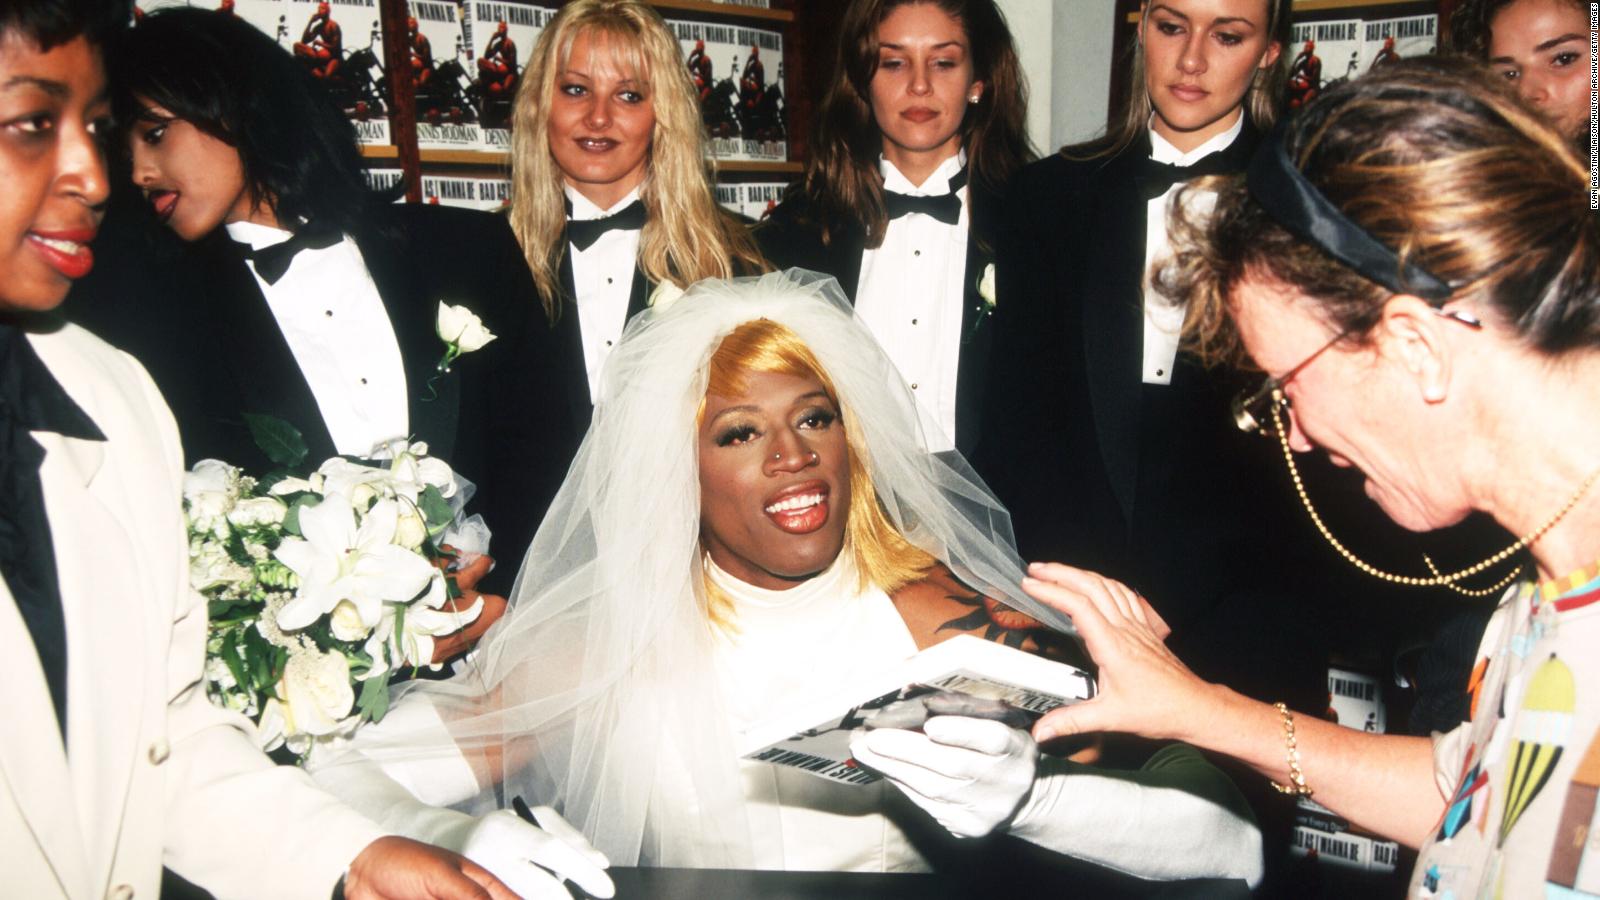 Remember when Dennis Rodman wore a wedding dress? - CNN Style